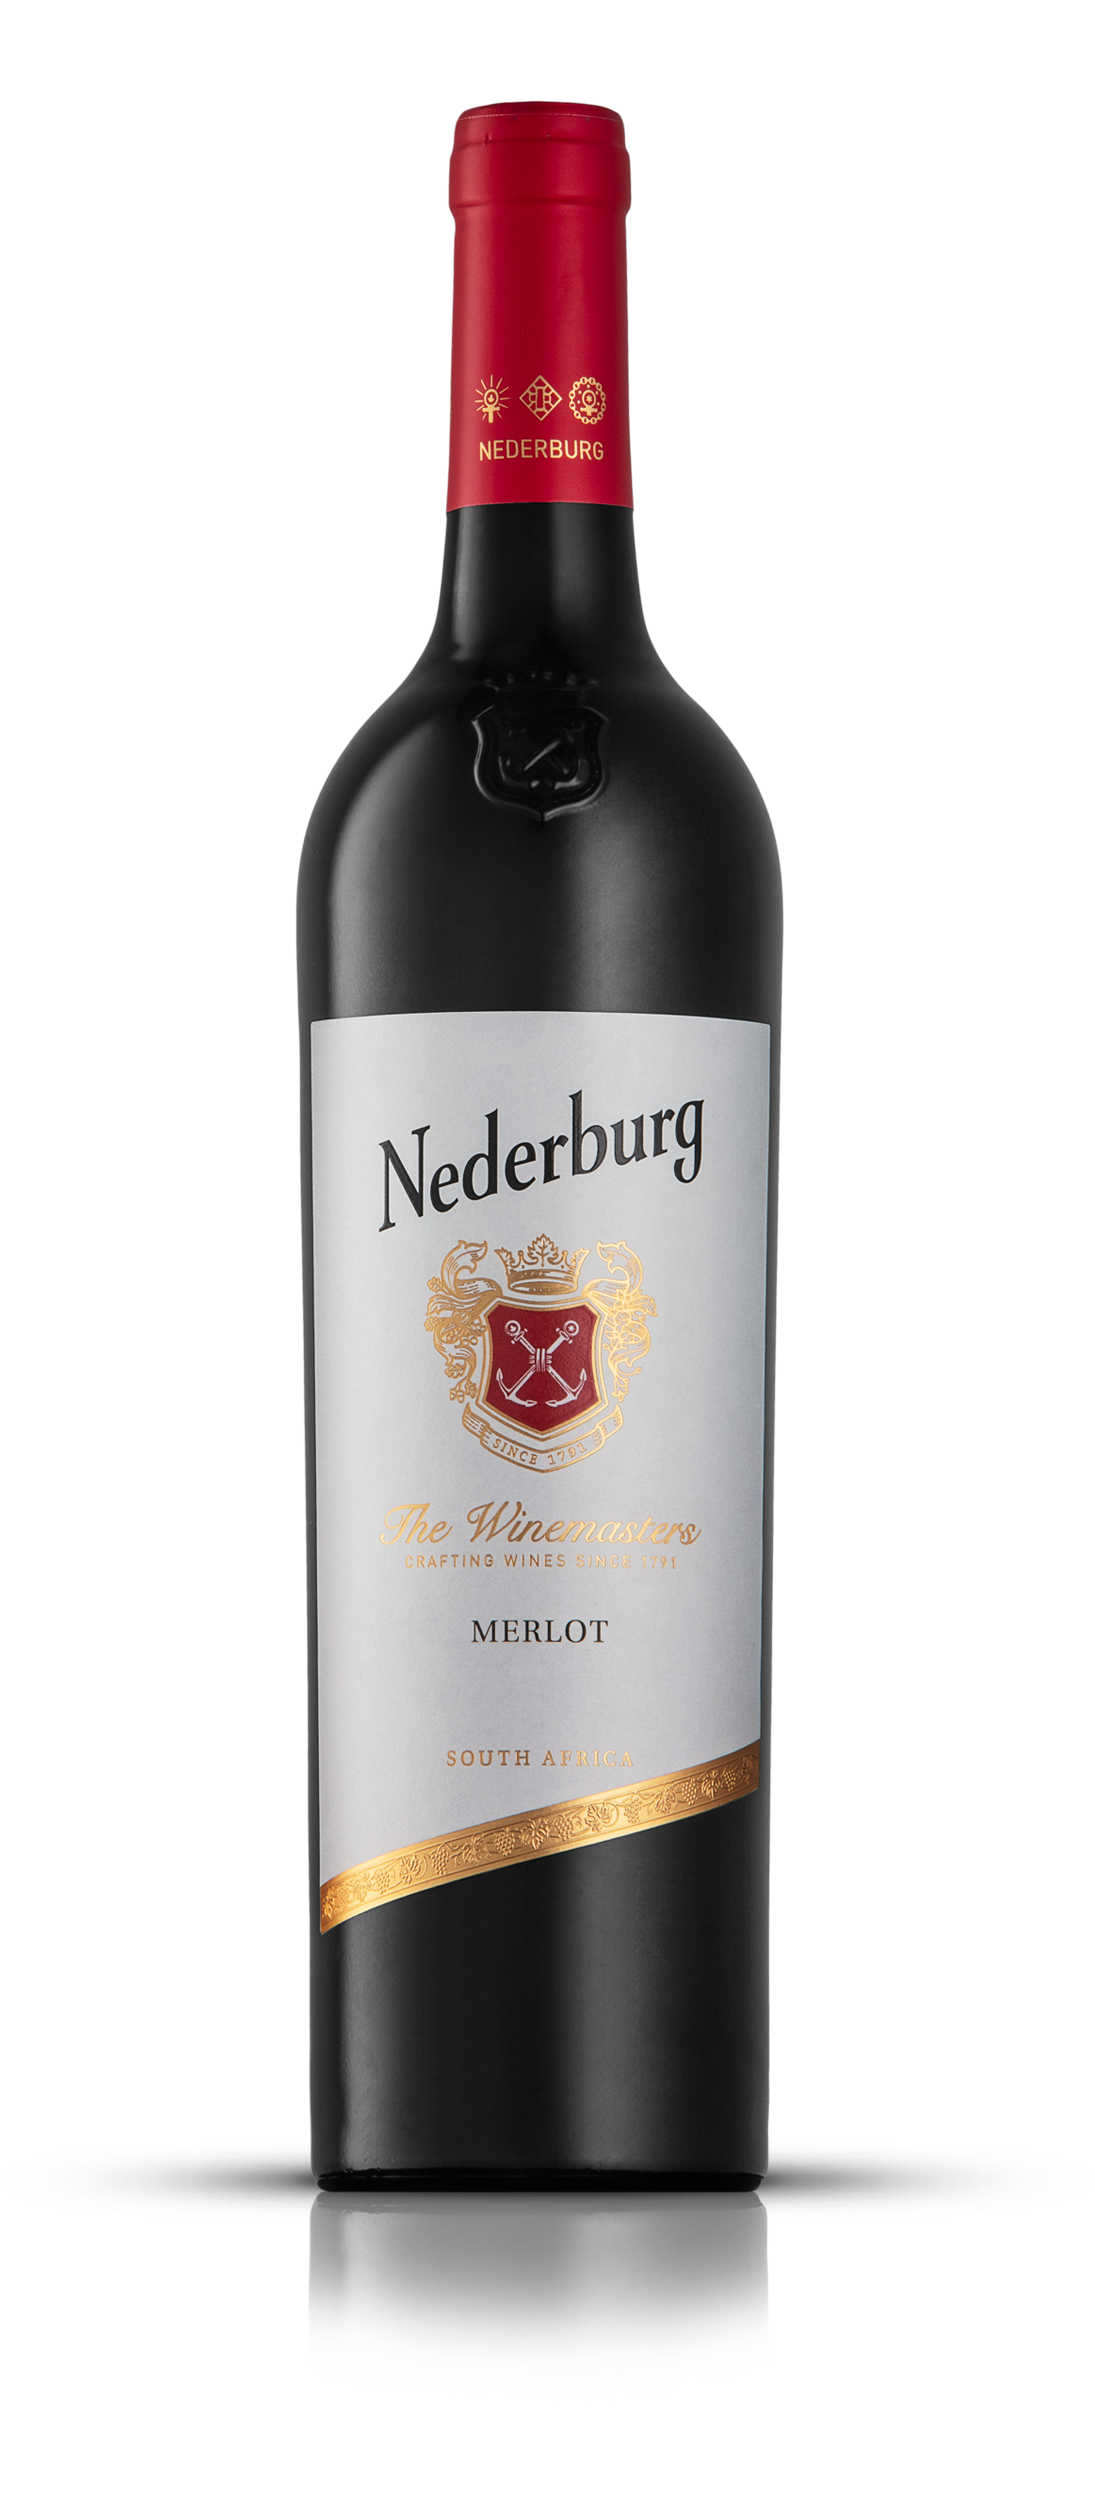 https://dam.distell.co.za/m/608272b7a3cfea00/original/nederburg-winemasters-merlot-website-pack-shot.png